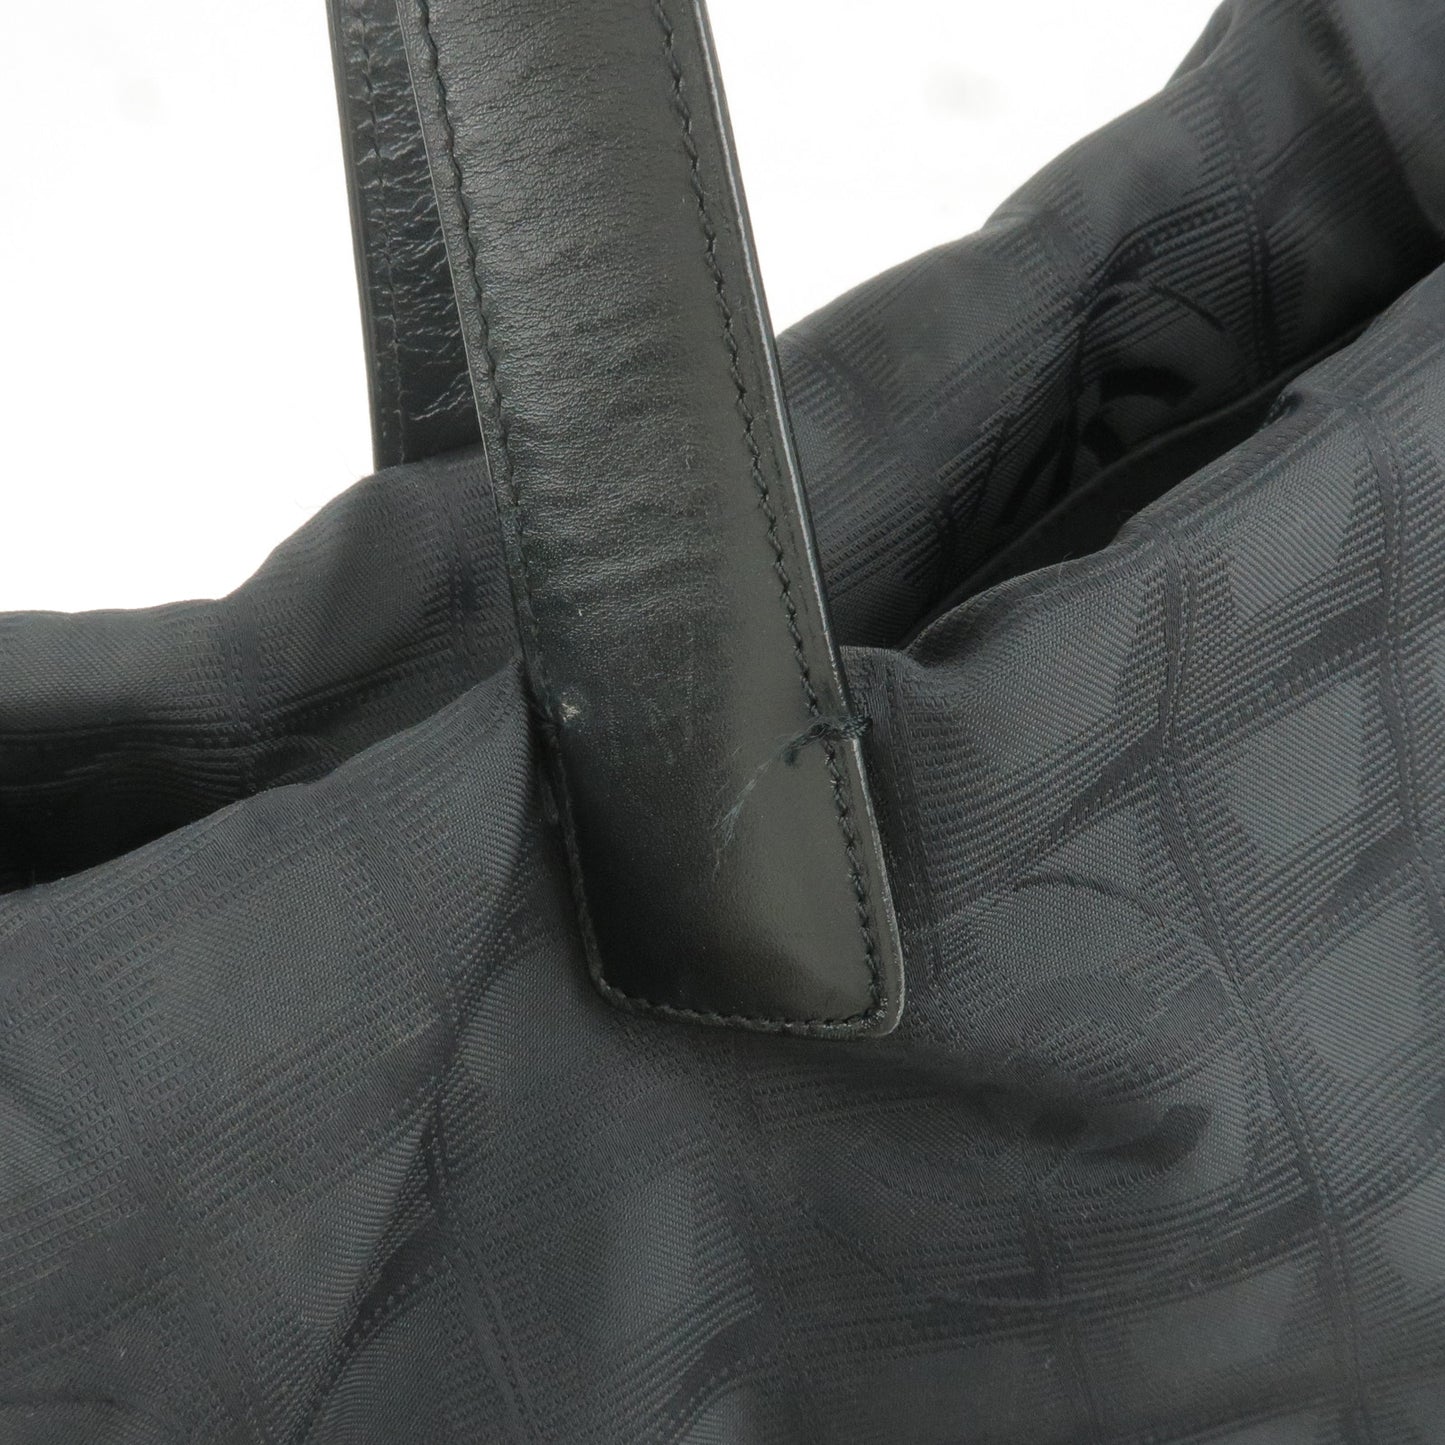 CHANEL Travel Line Nylon Jacquard Leather Tote Bag Black A15991